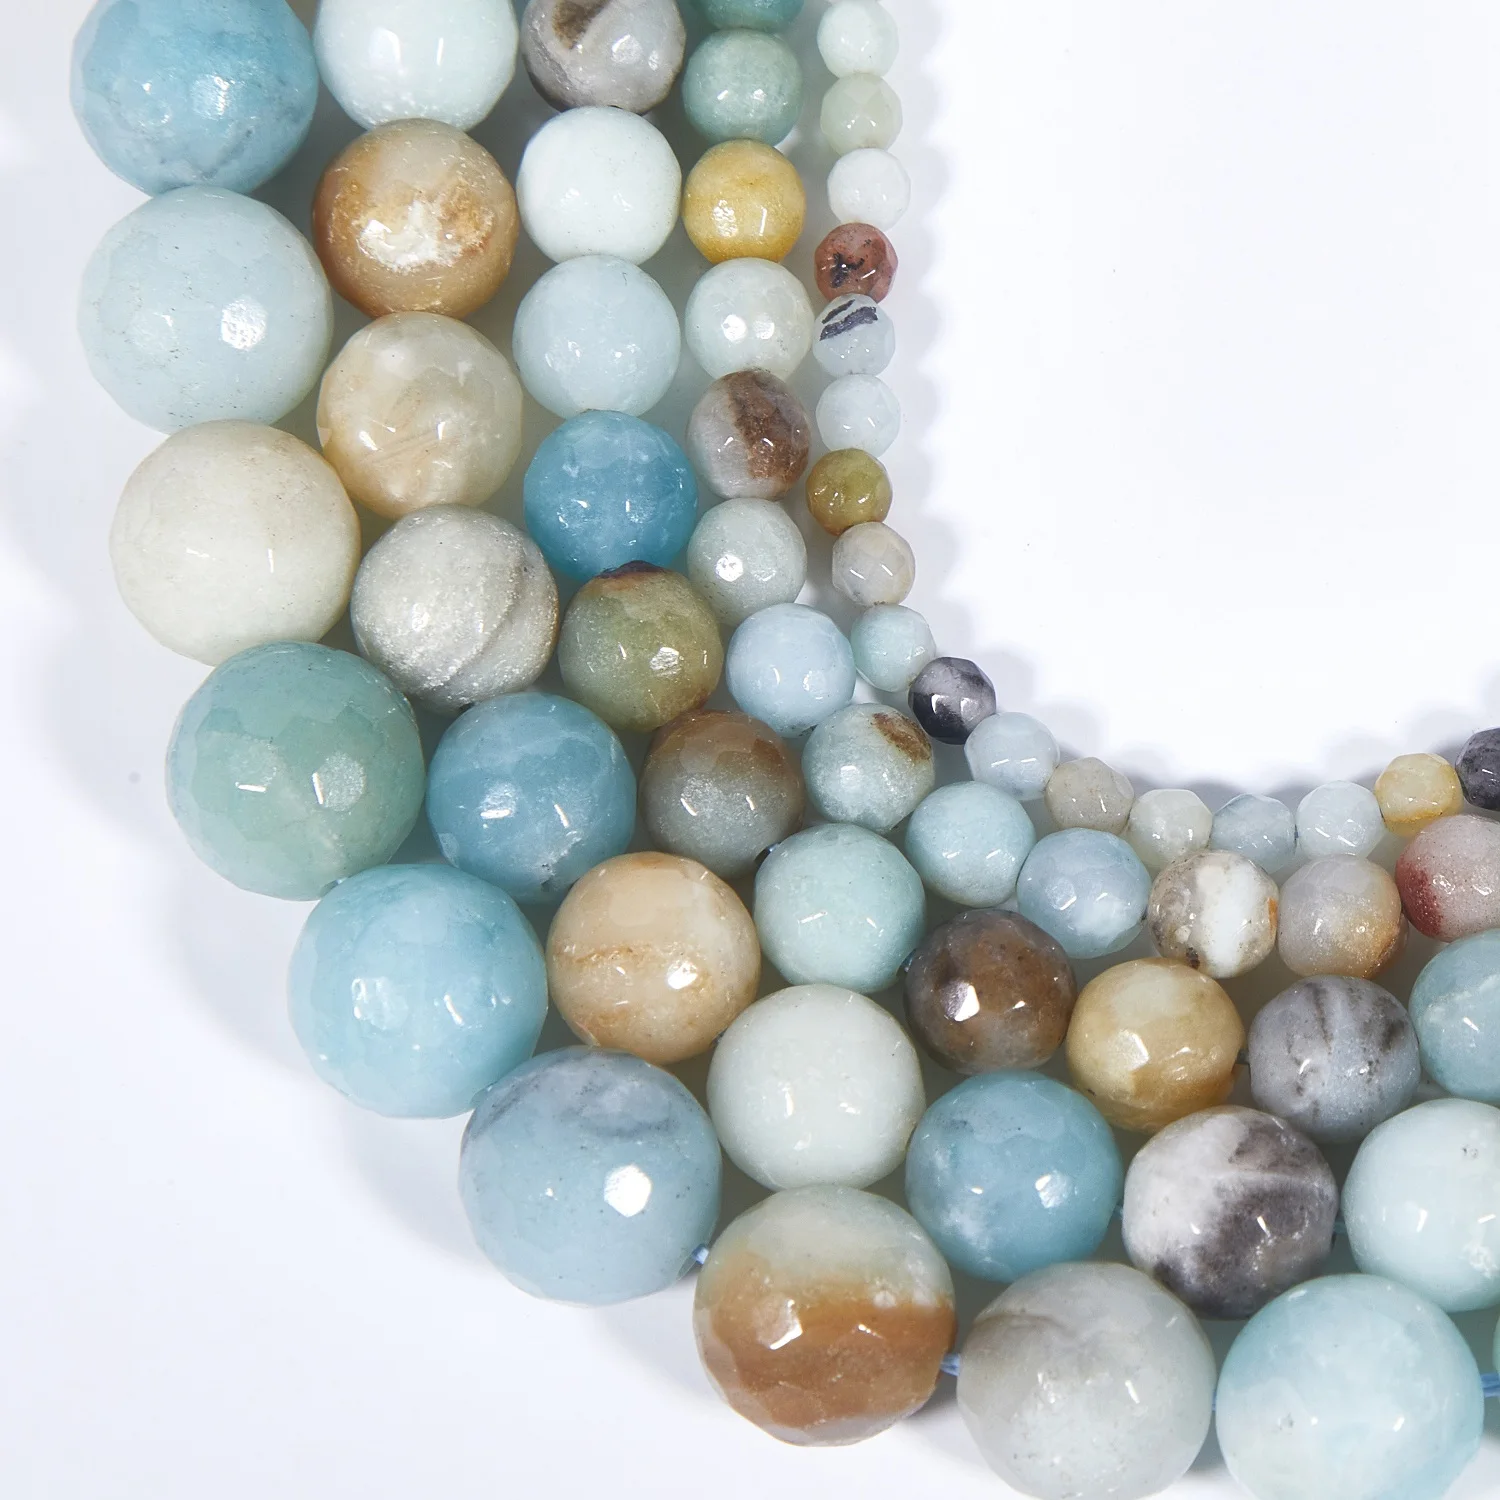 

Wholesale Natural Amazonite Cutting Faceted Beads Well Polished Jewelry Making Round Amazonite Gemstone Loose Beads